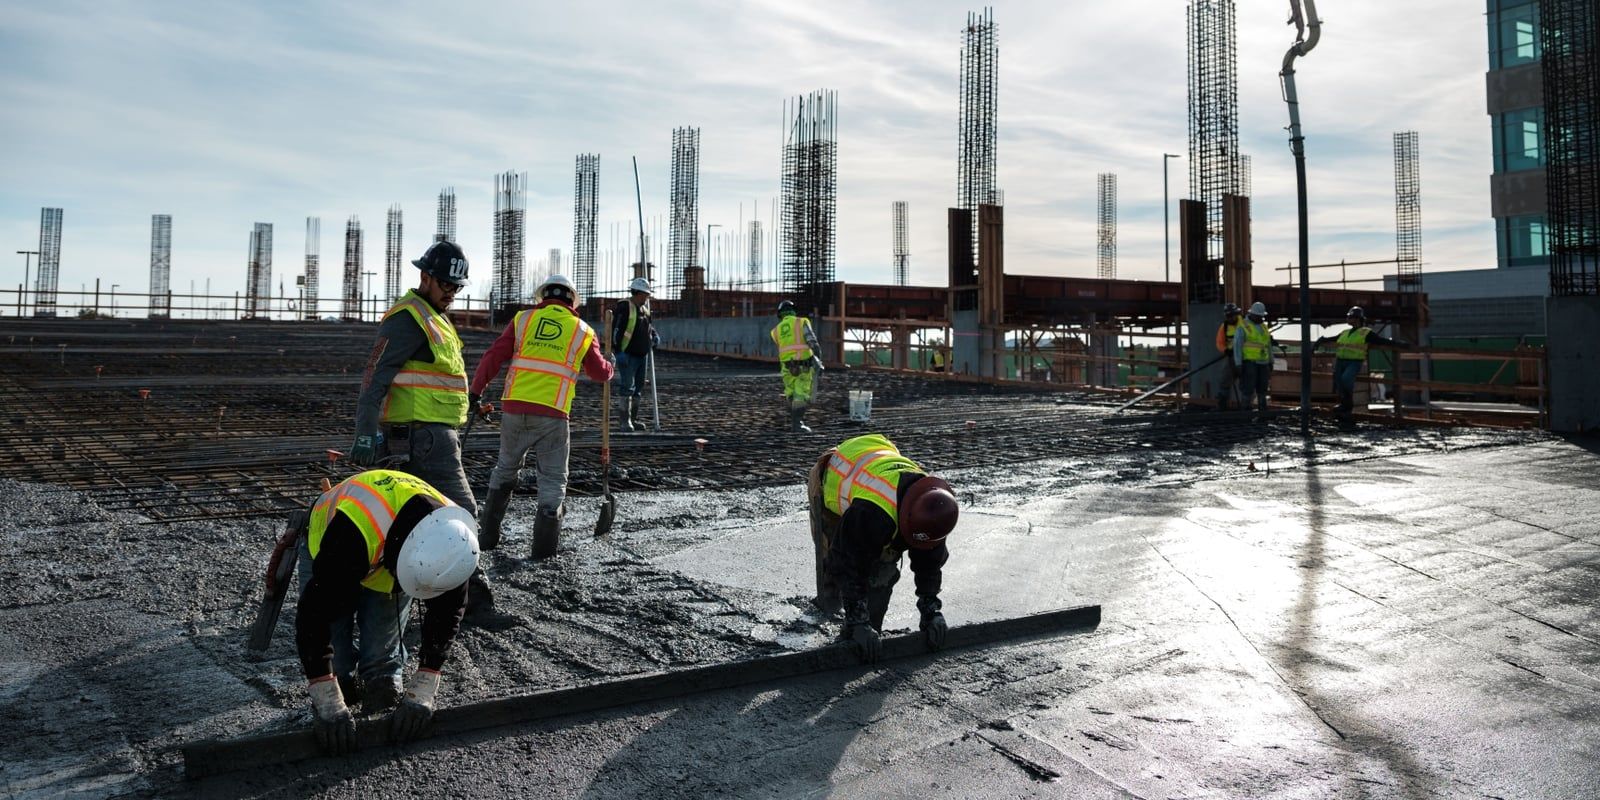 Procore Acquires LaborChart to Improve Construction Workforce Management